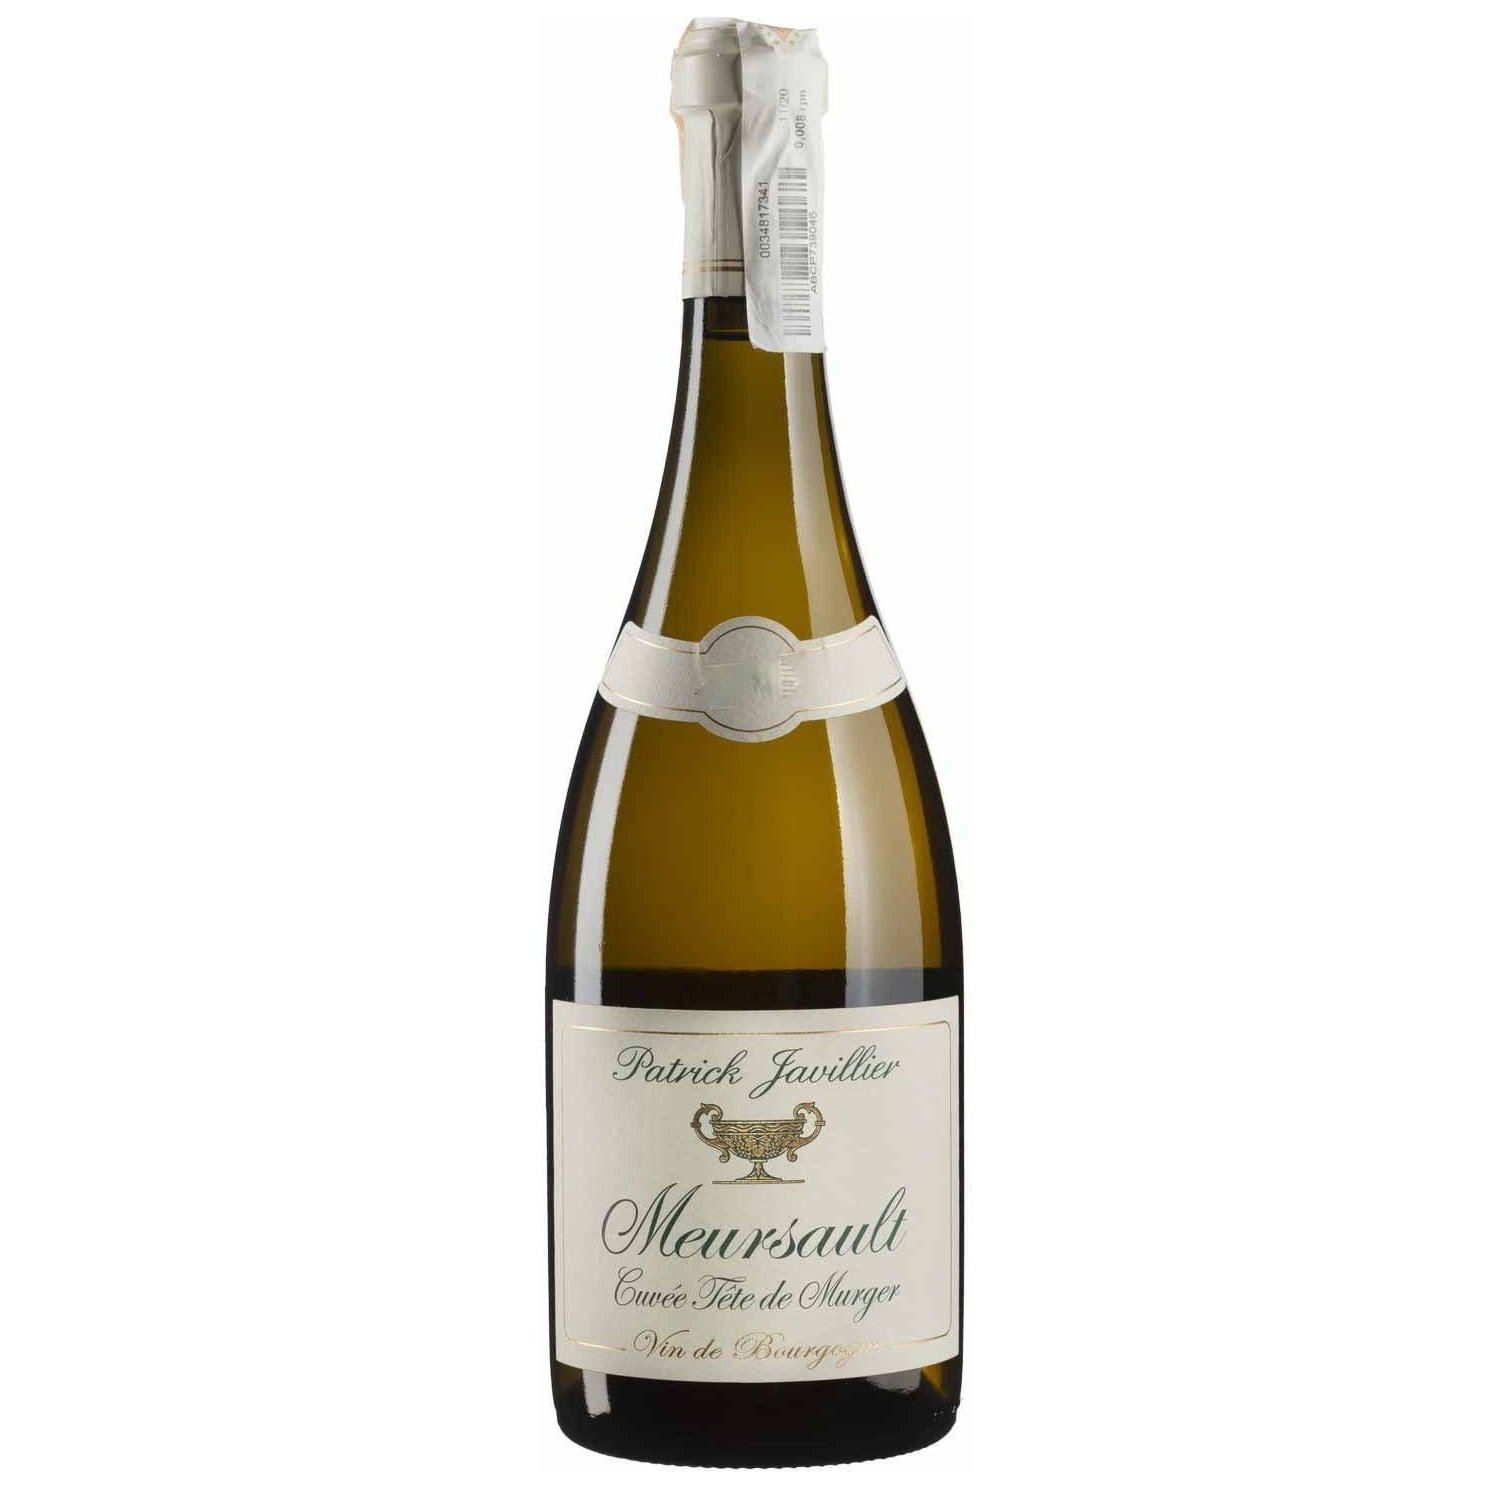 Вино Patrick Javillier Meursault Cuve Tete de Murger 2020, біле, сухе, 0,75 л (W3869) - фото 1